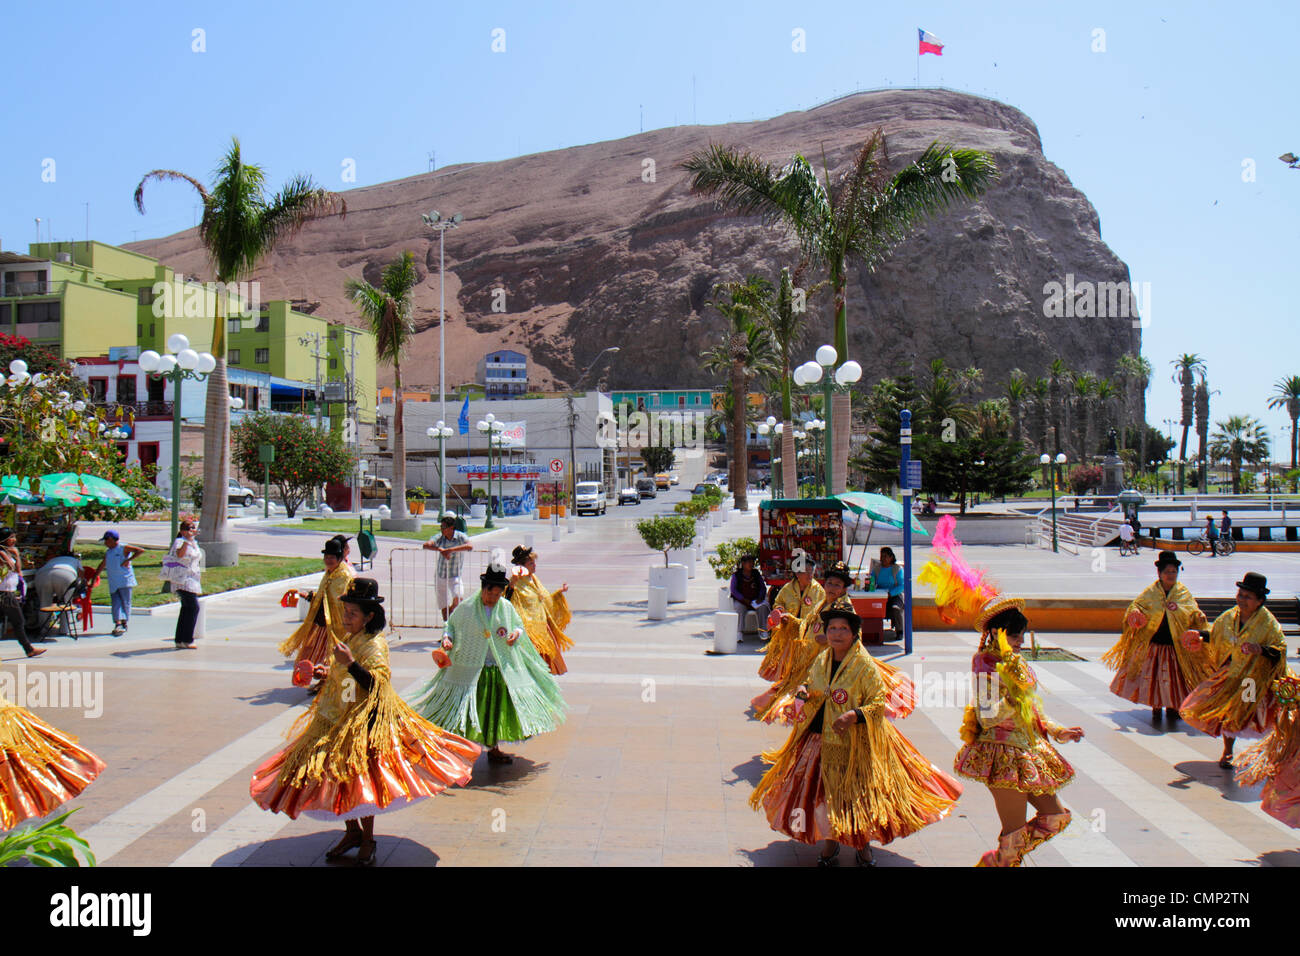 Arica Chile, Plaza Colon, El Morro de Arica, Rock, Carnaval Andino, Karneval der Anden, Parade, indigene, Aymara Erbe, Folklore traditioneller Tanz, Truppe, seine Stockfoto